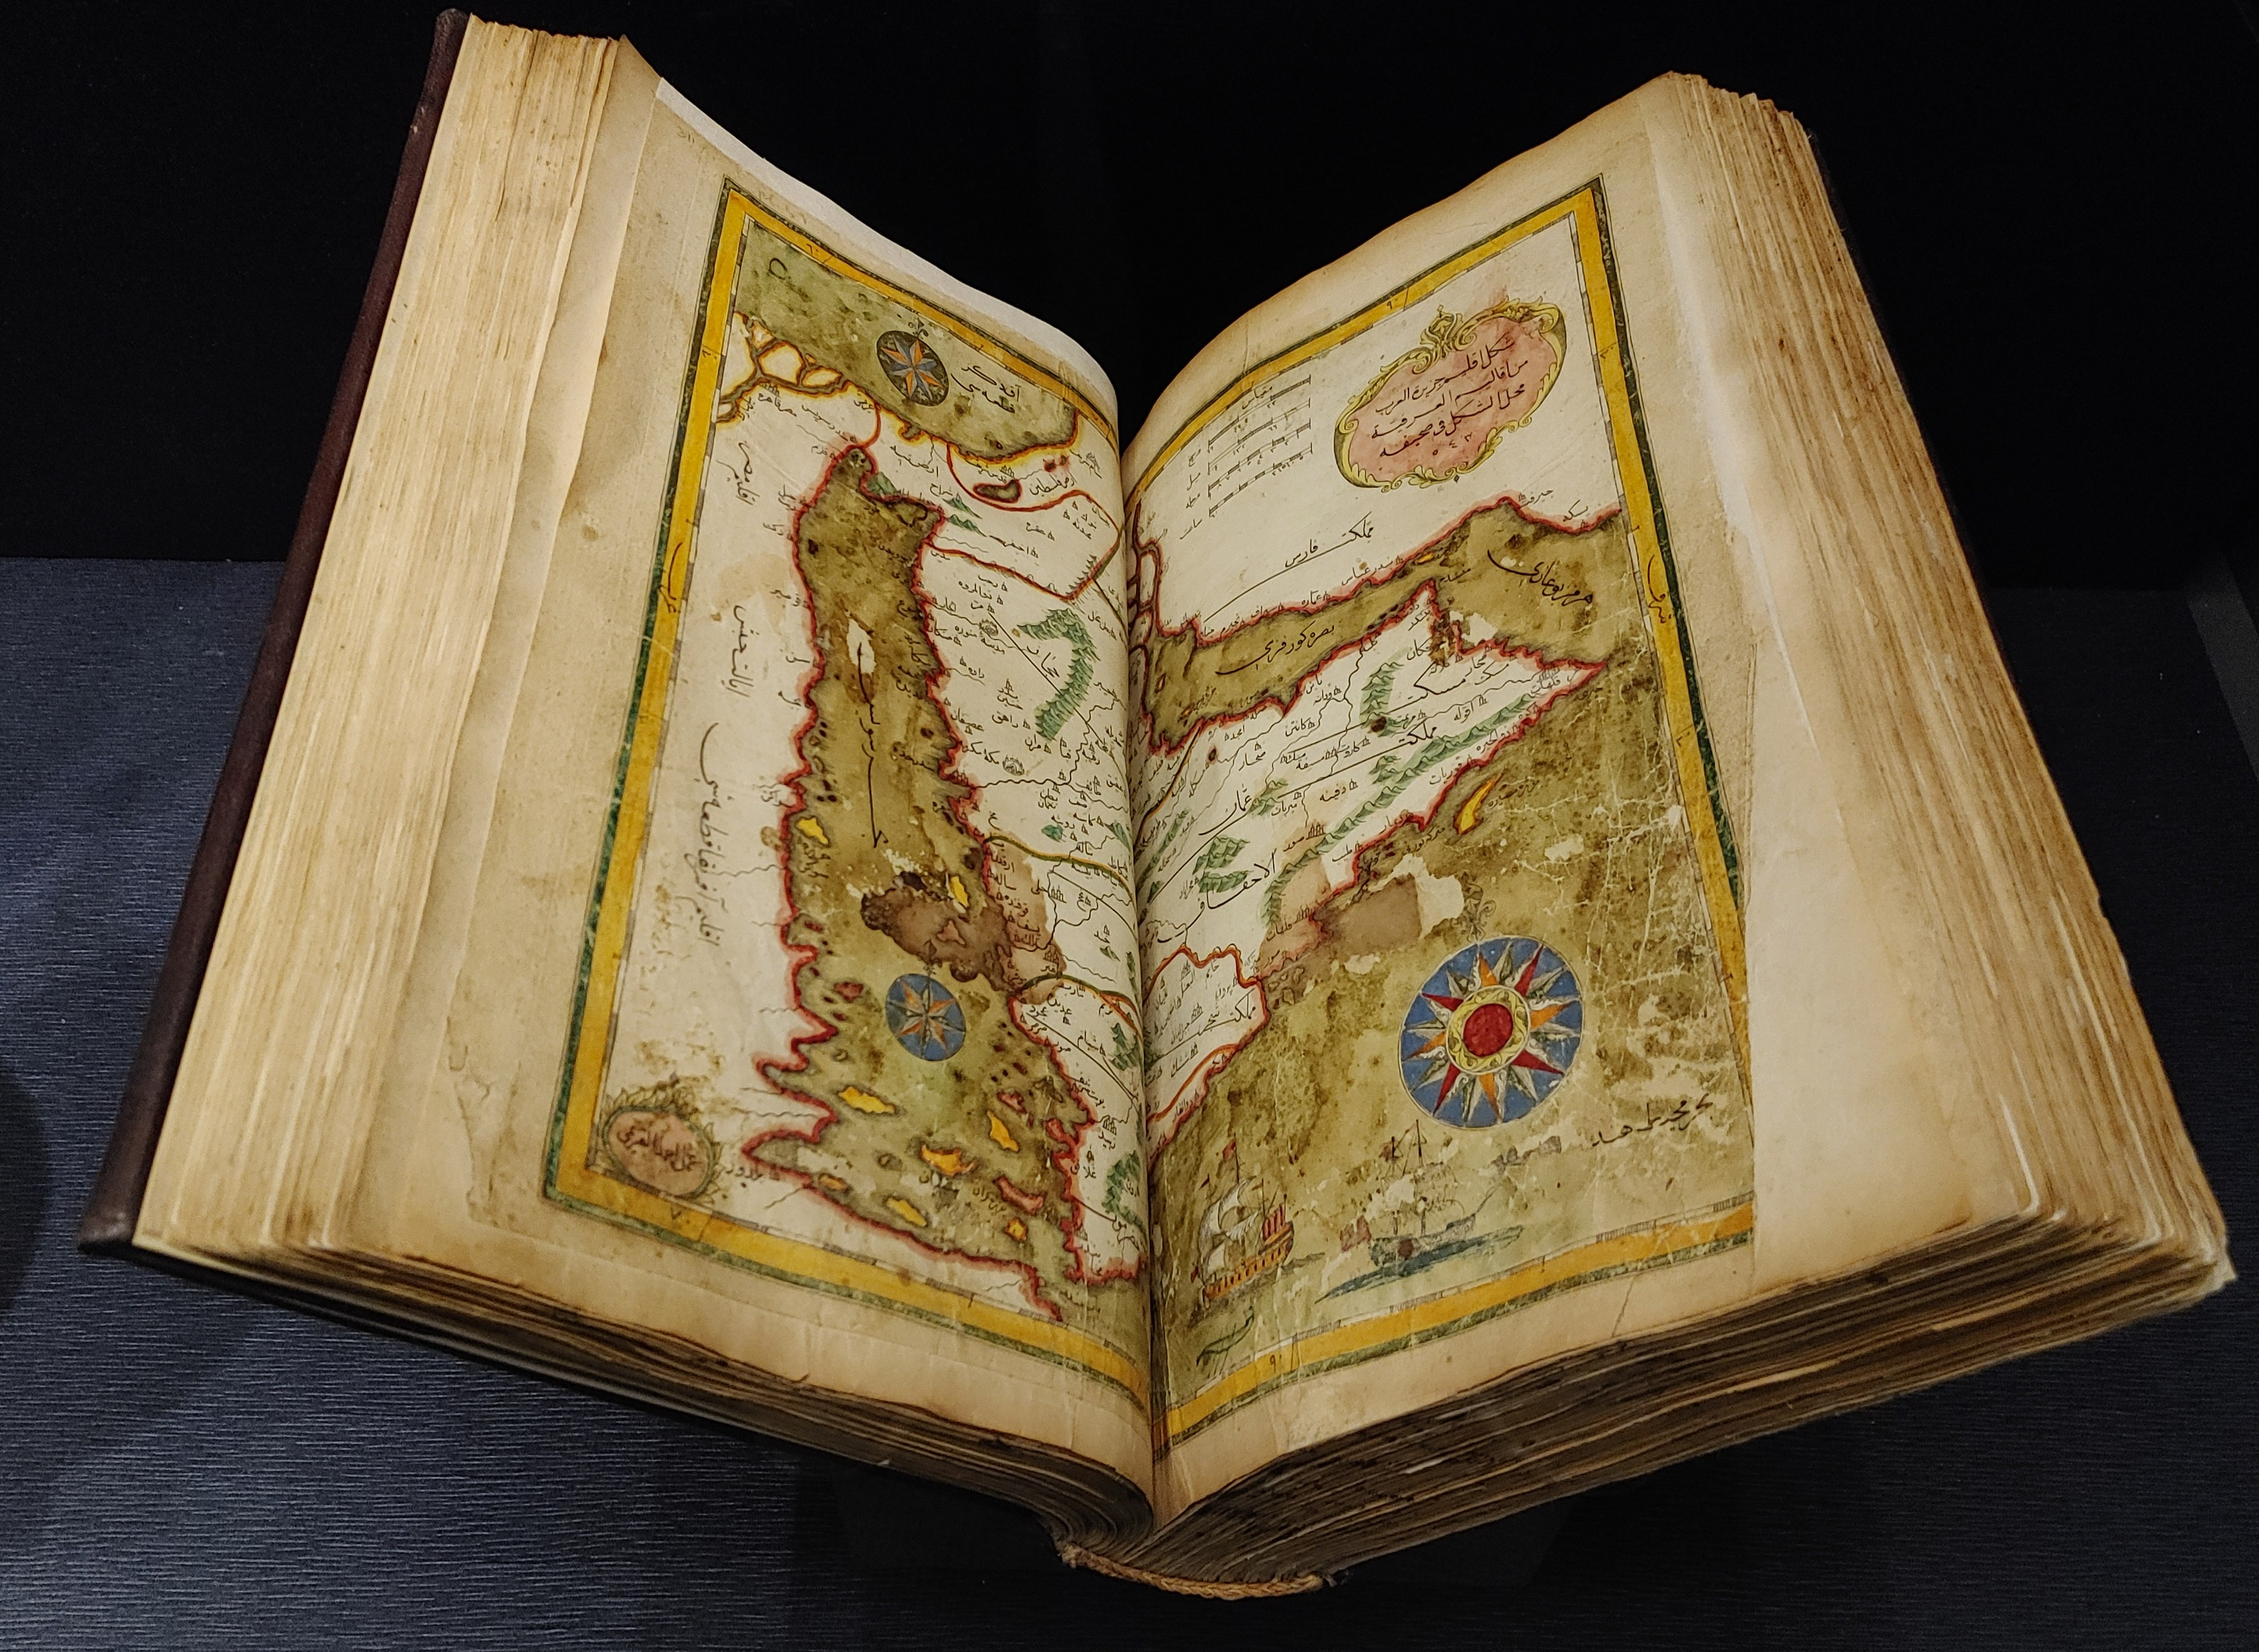 17th century Ottoman book of travels manuscript